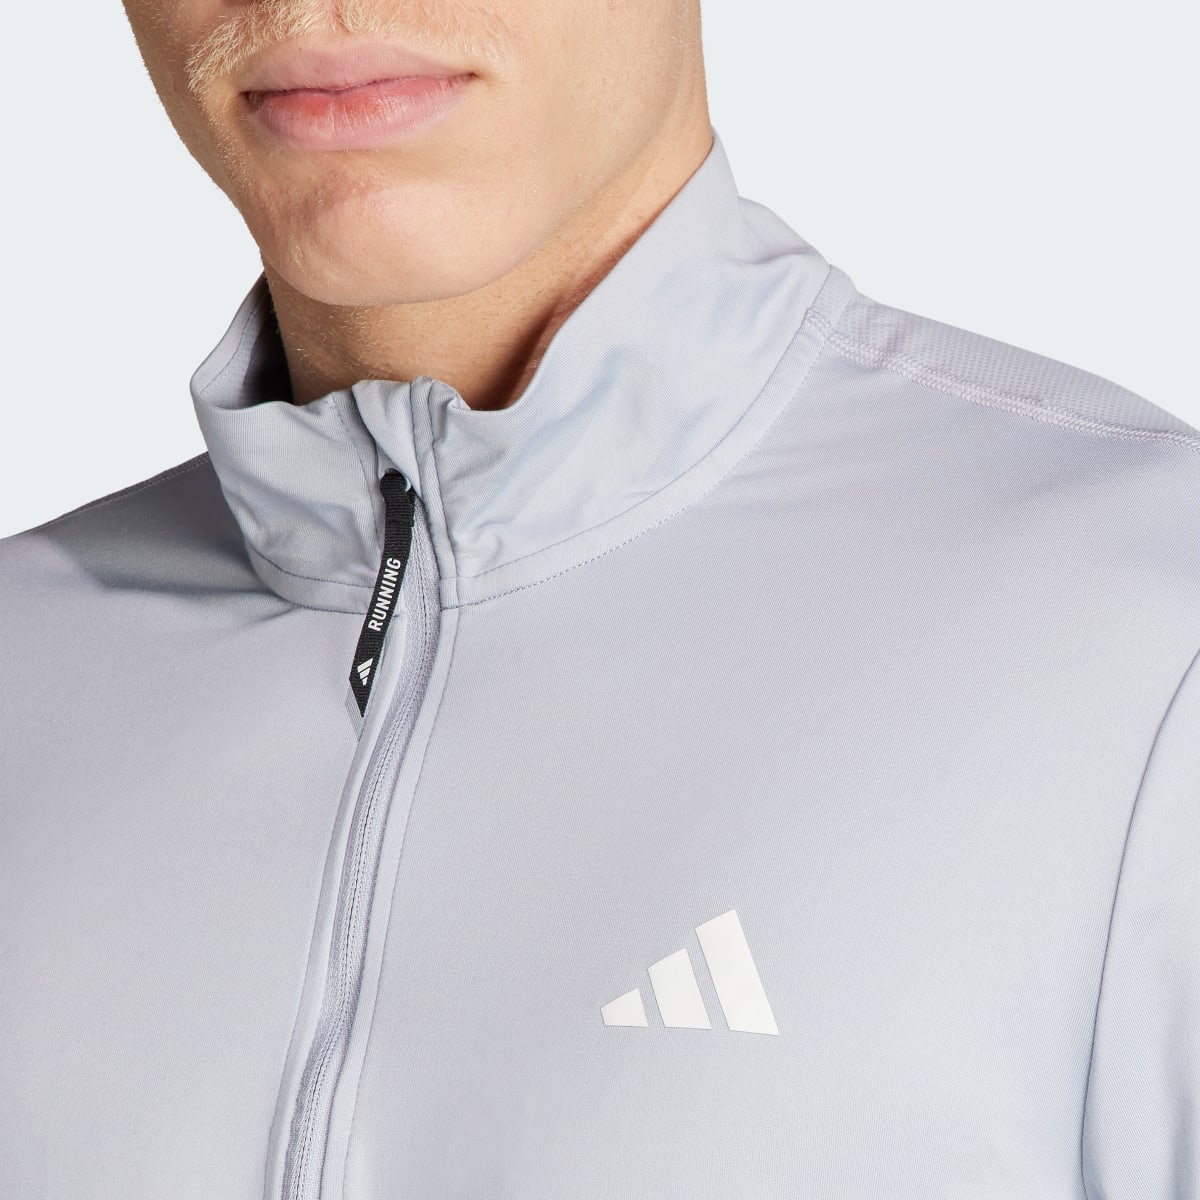 Adidas Own the Run Half-Zip Jacket. 6